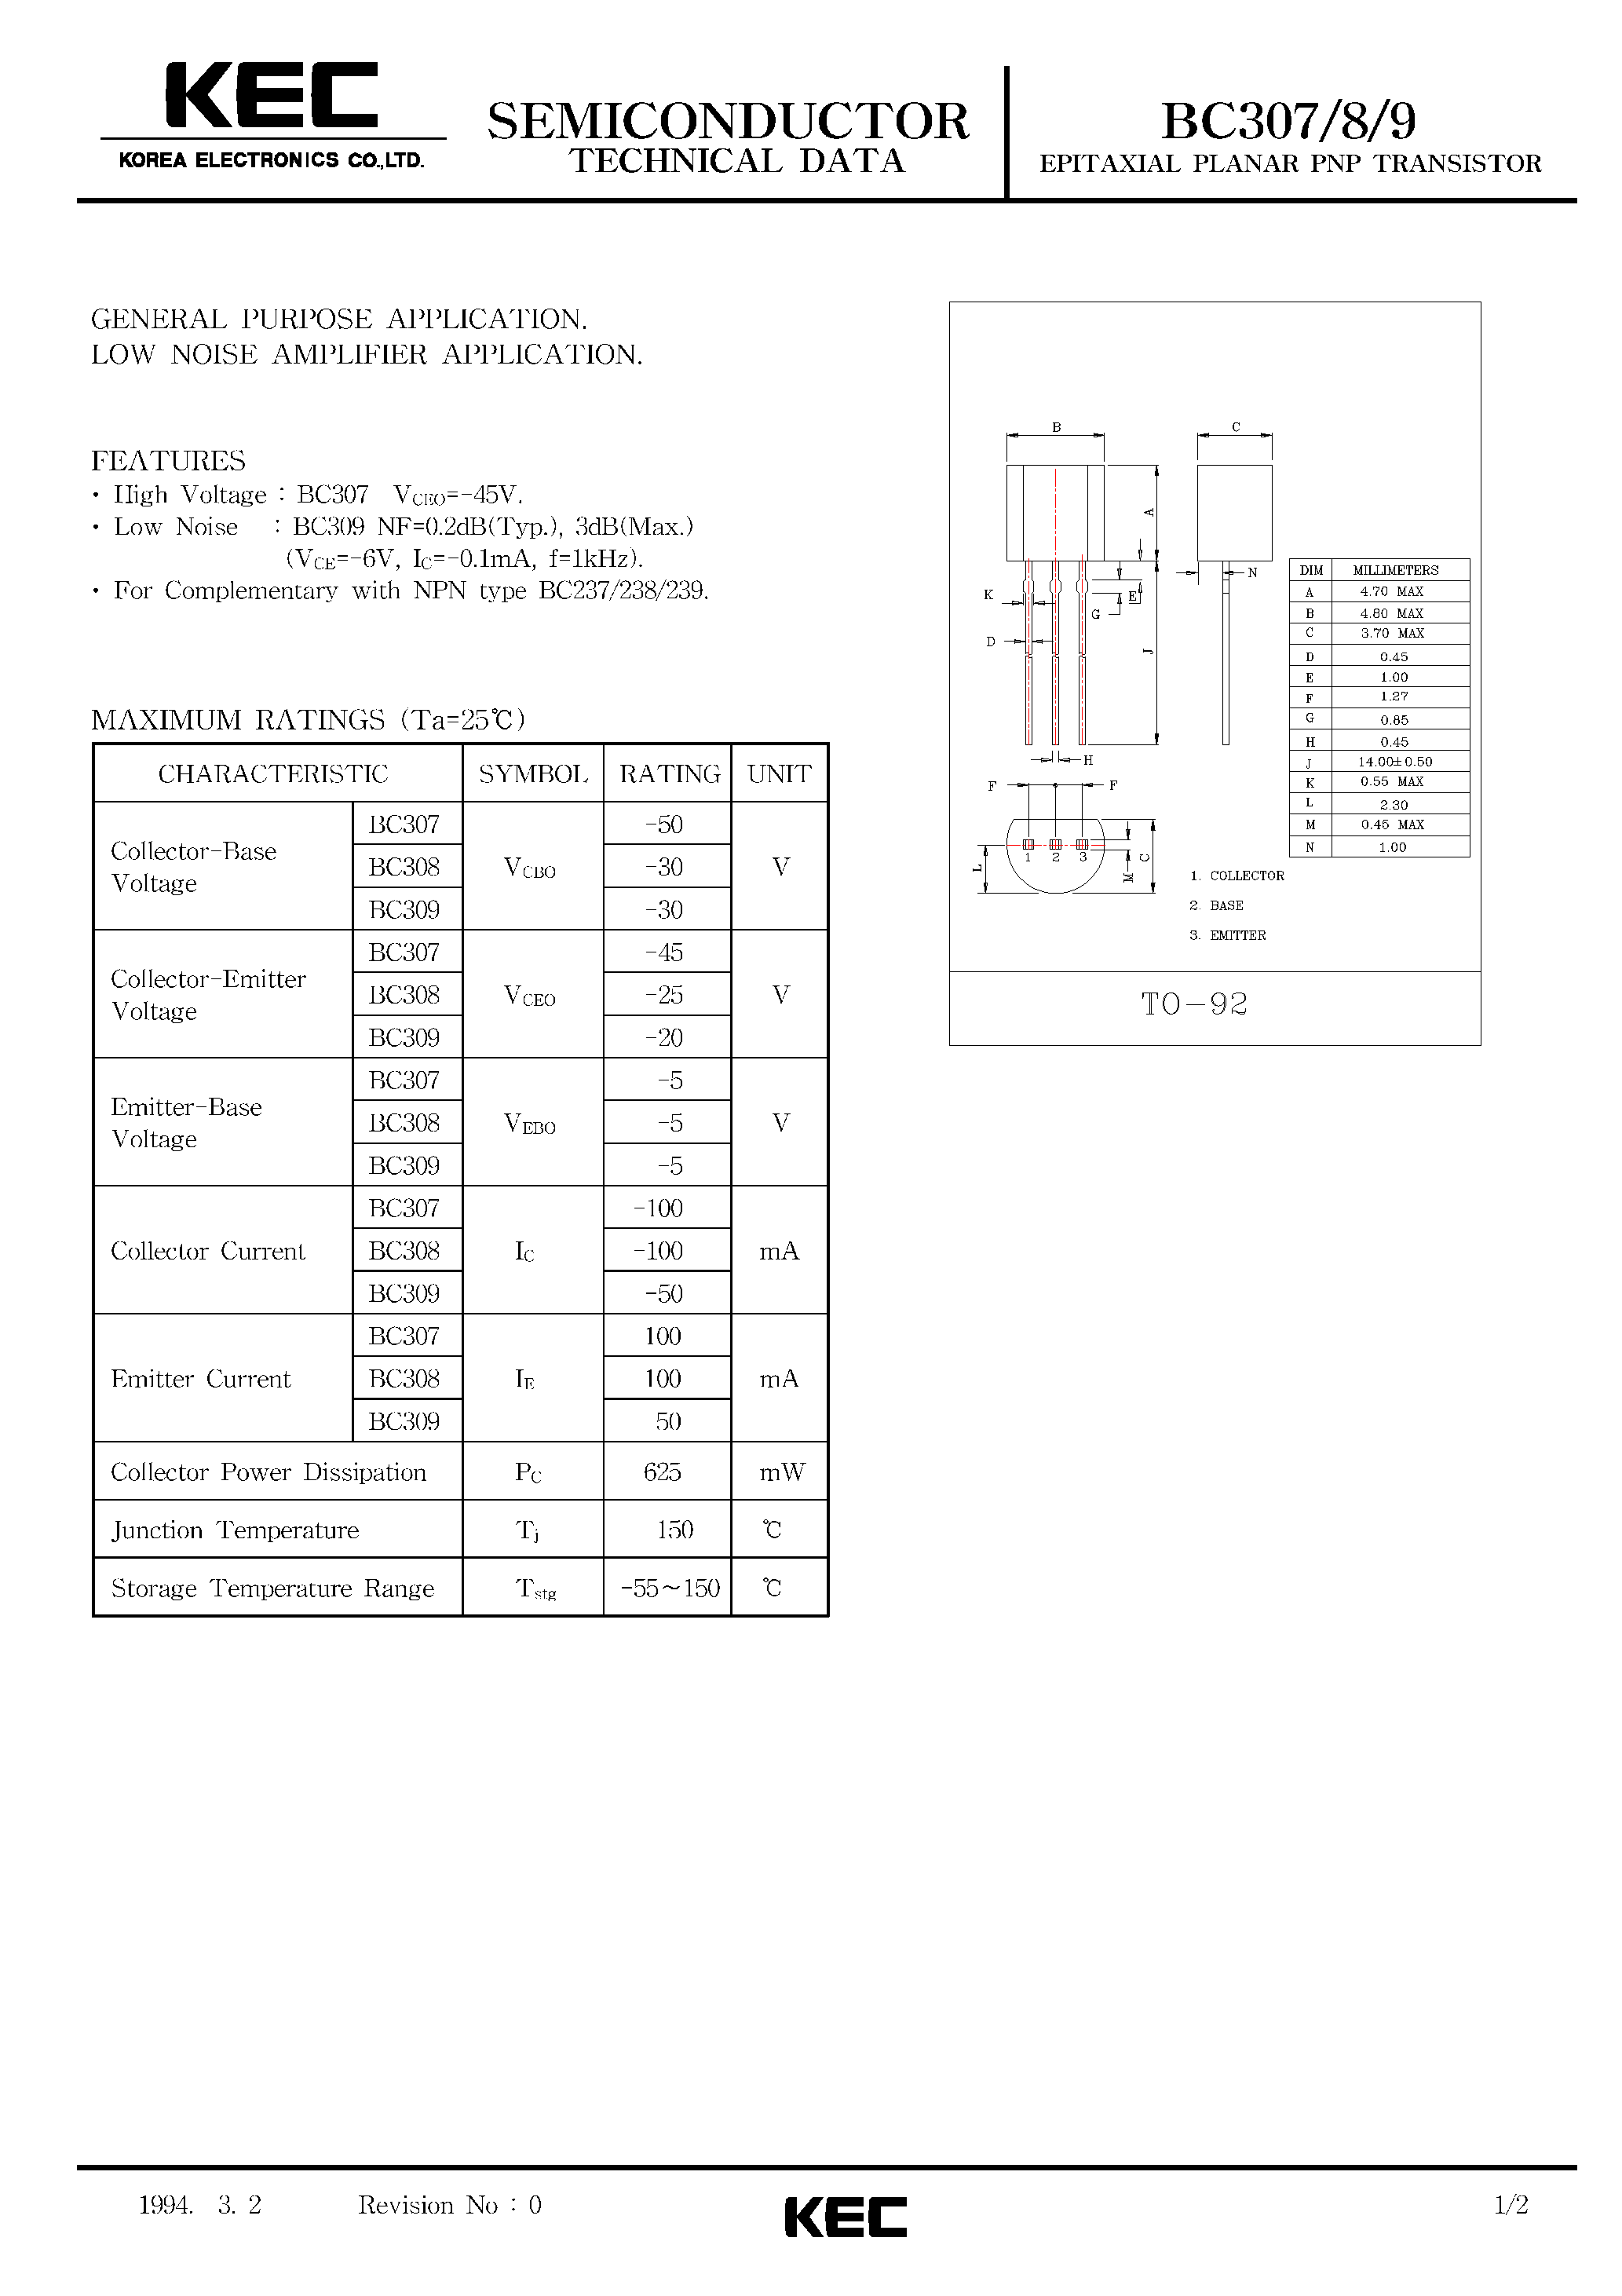 Datasheet BC307 - EPITAXIAL PLANAR NPN TRANSISTOR (GENERAL PURPOSE / LOW NOISE AMPLIFIER) page 1